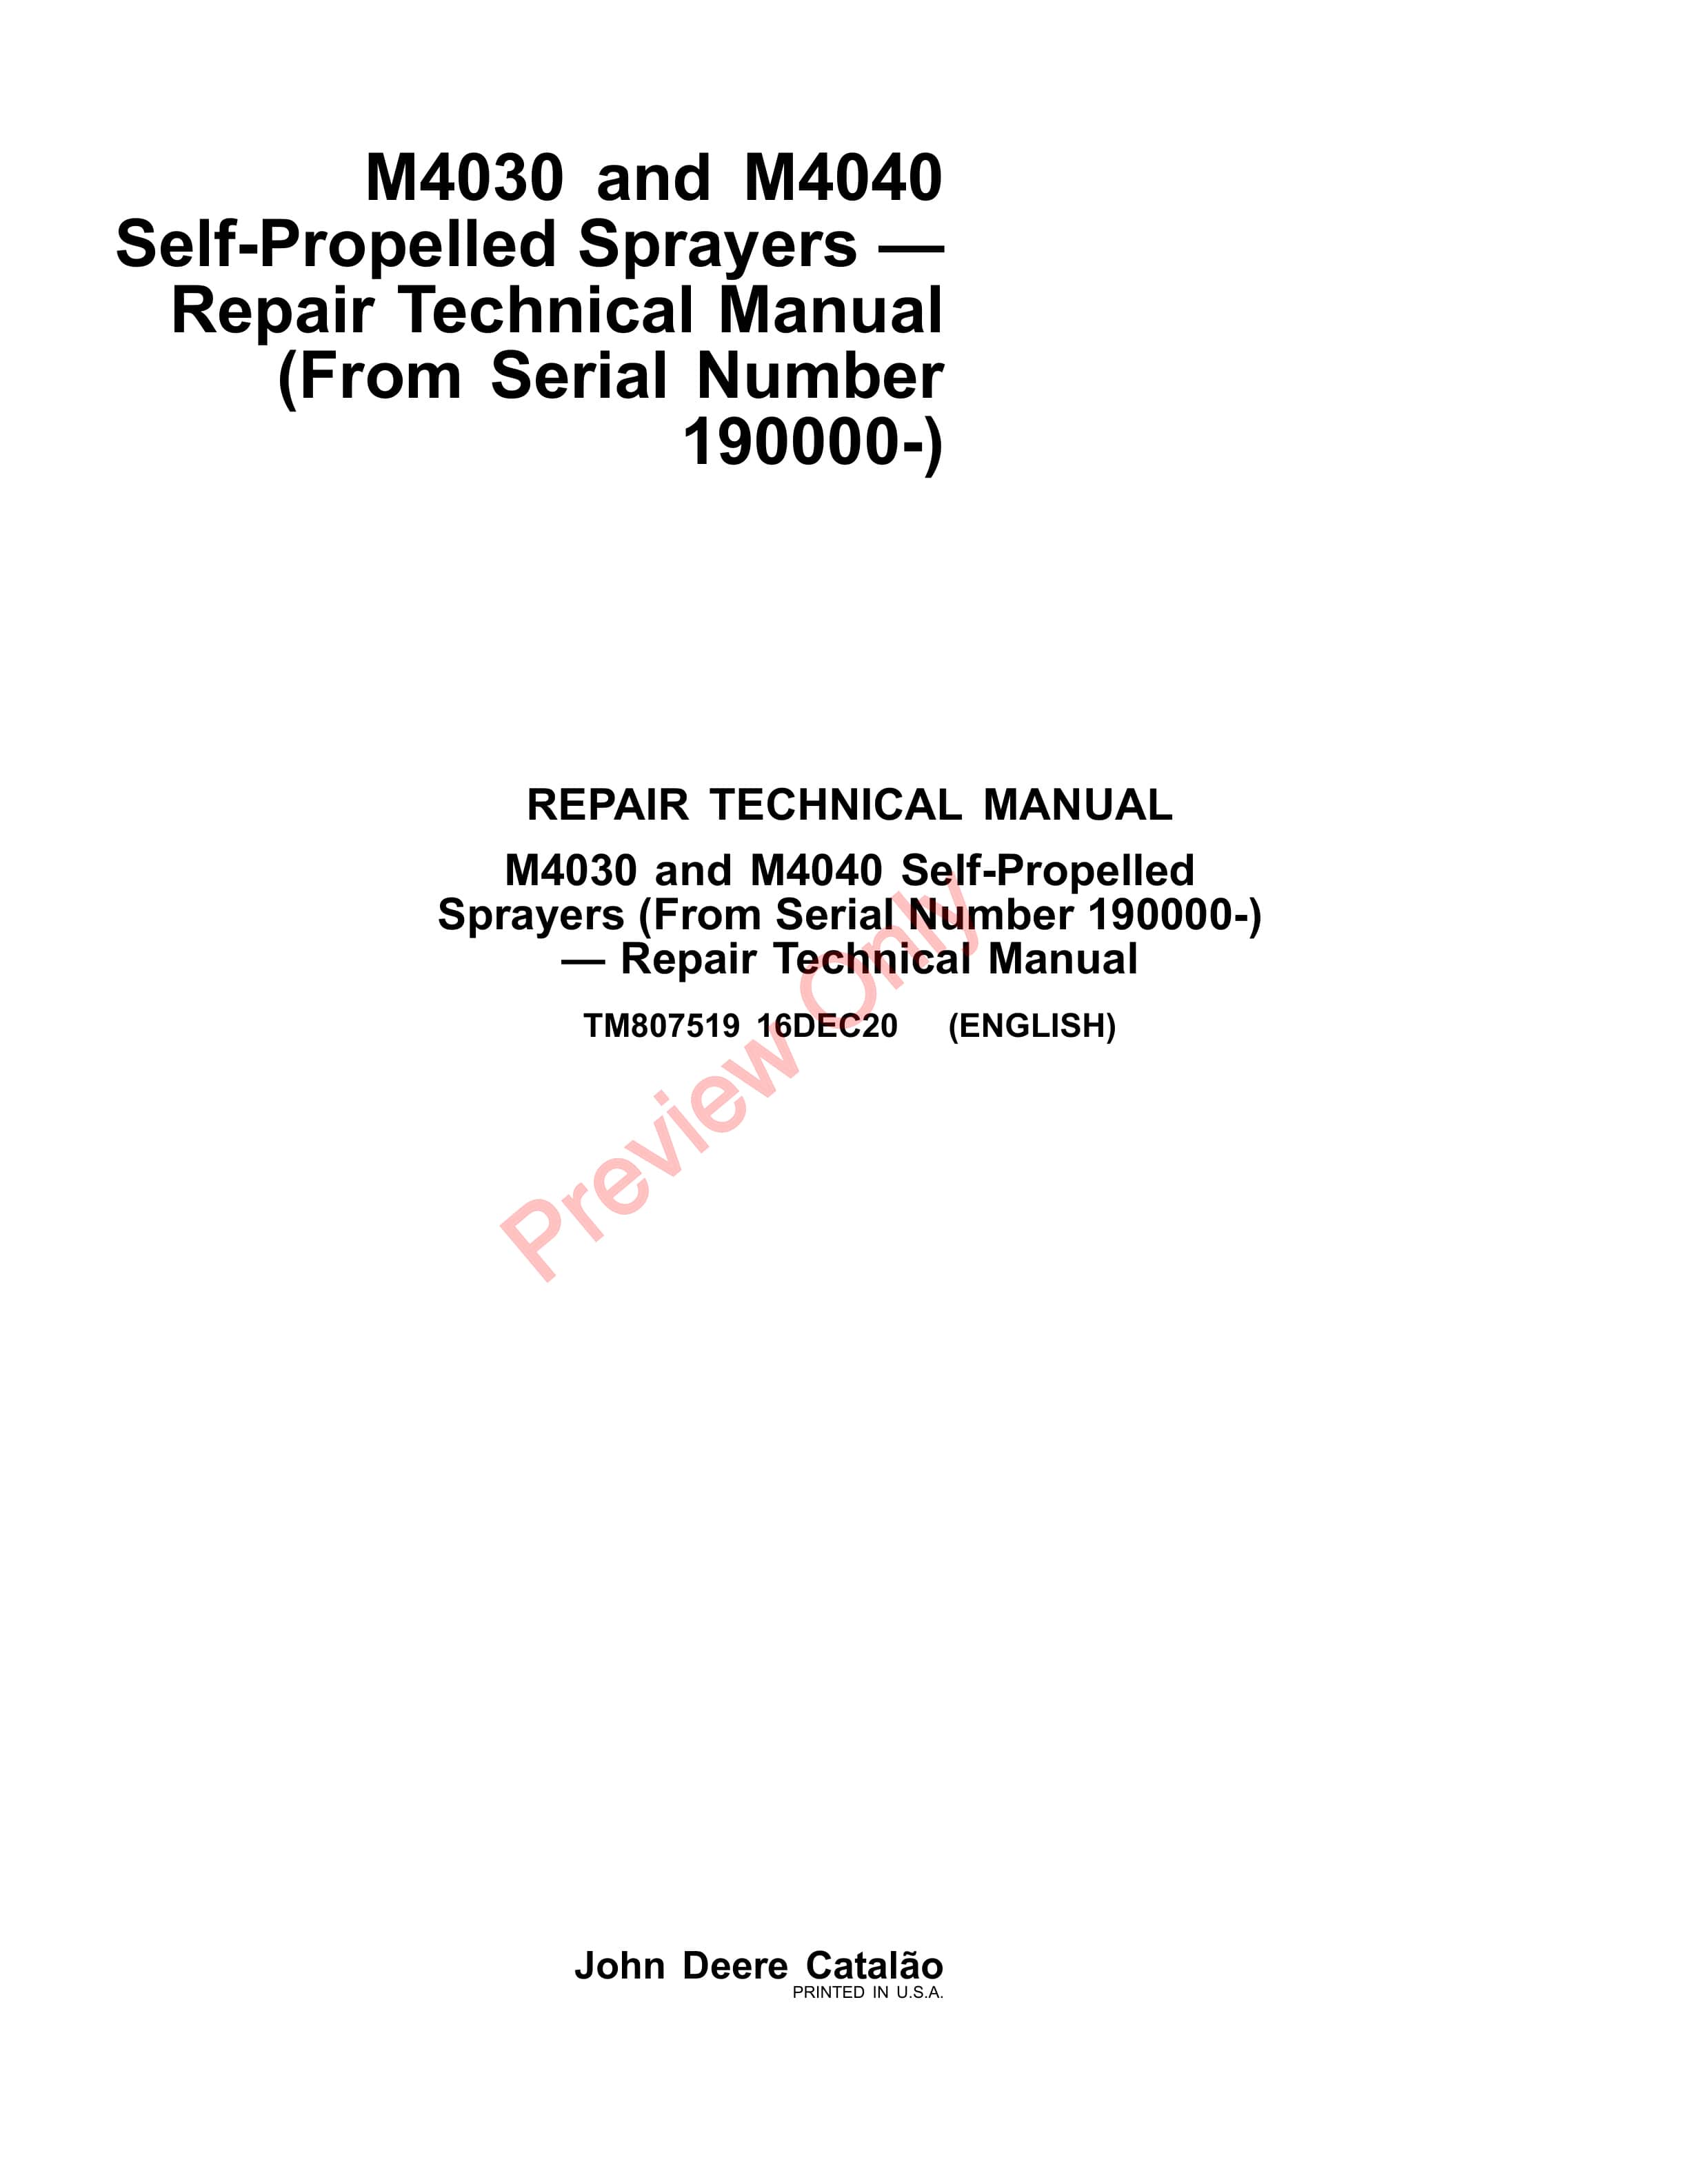 John Deere M4030 and M4040 Self Propelled Sprayers Repair Technical Manual TM807519 16DEC20 1